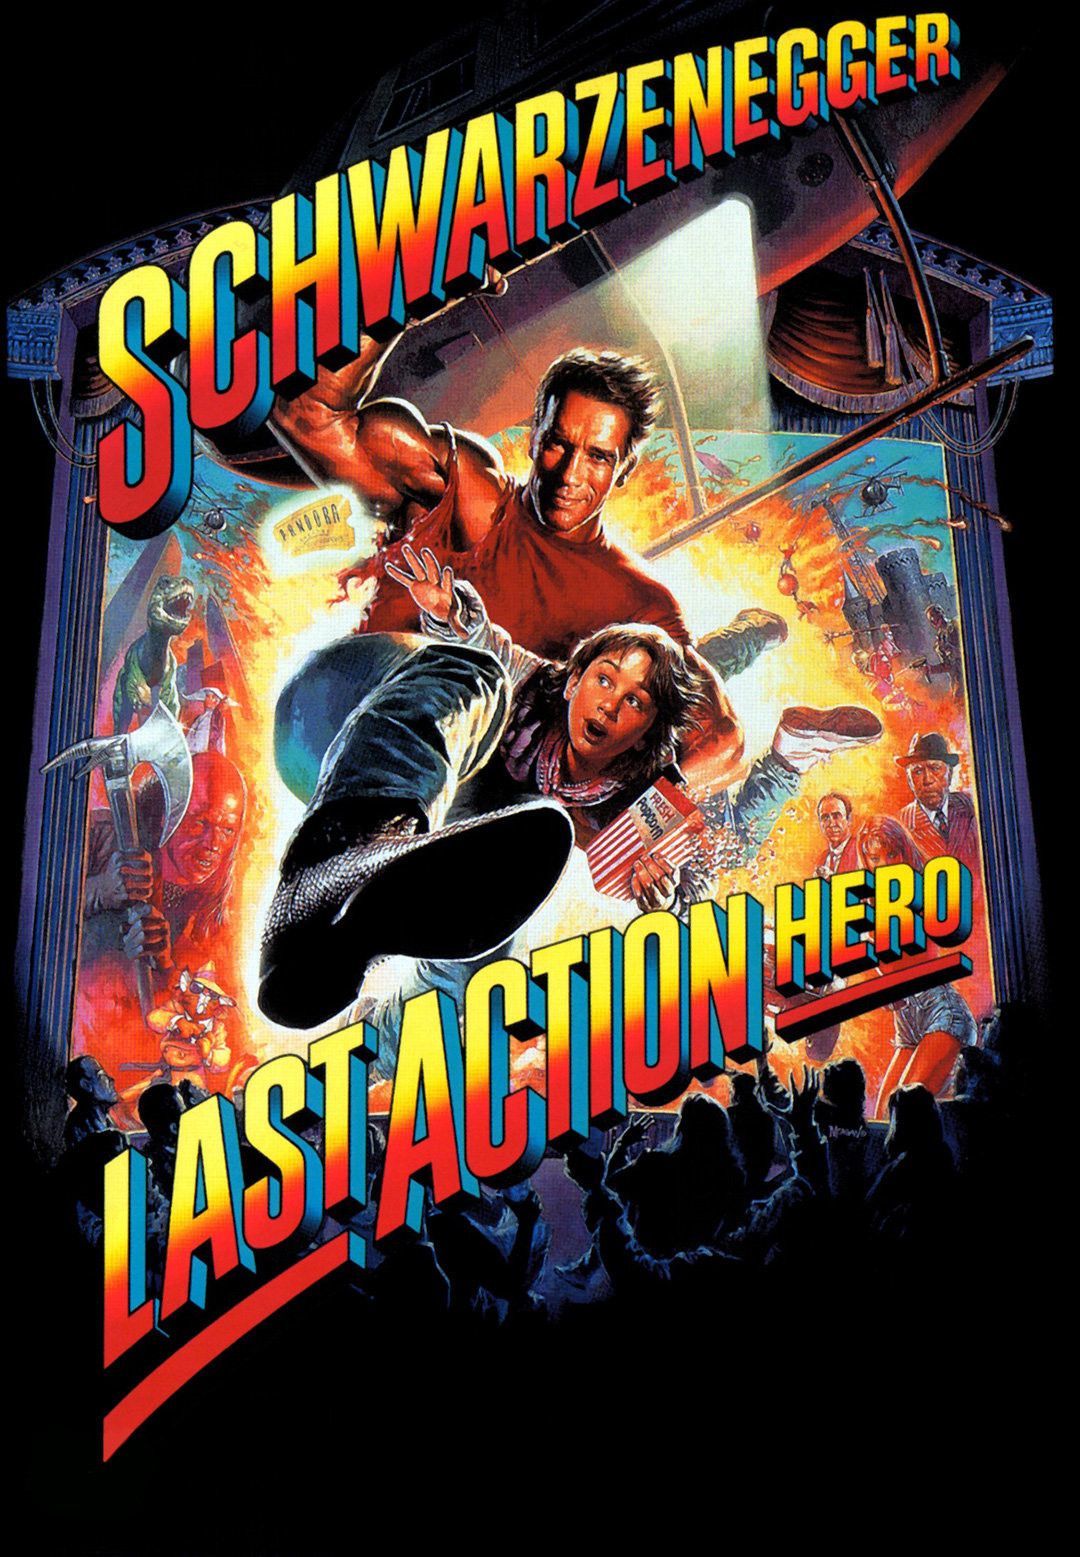 Last Action Hero wallpaper, Movie, HQ Last Action Hero pictureK Wallpaper 2019